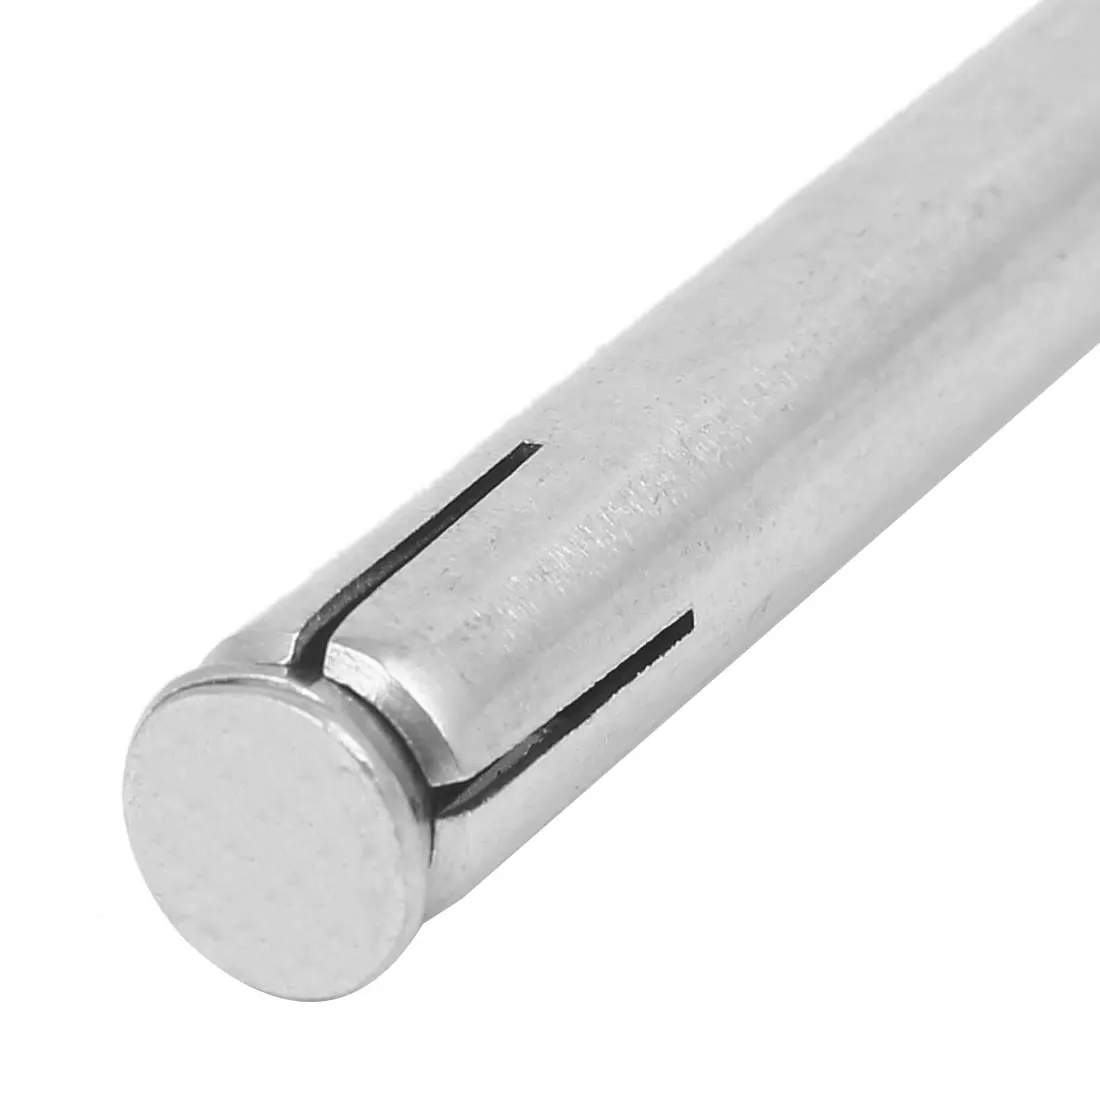 3M 341D Coated Aluminum Oxide Sanding Belt 60 Grit 6 in Width x 79 in Length 76348 PRICE is per CASE